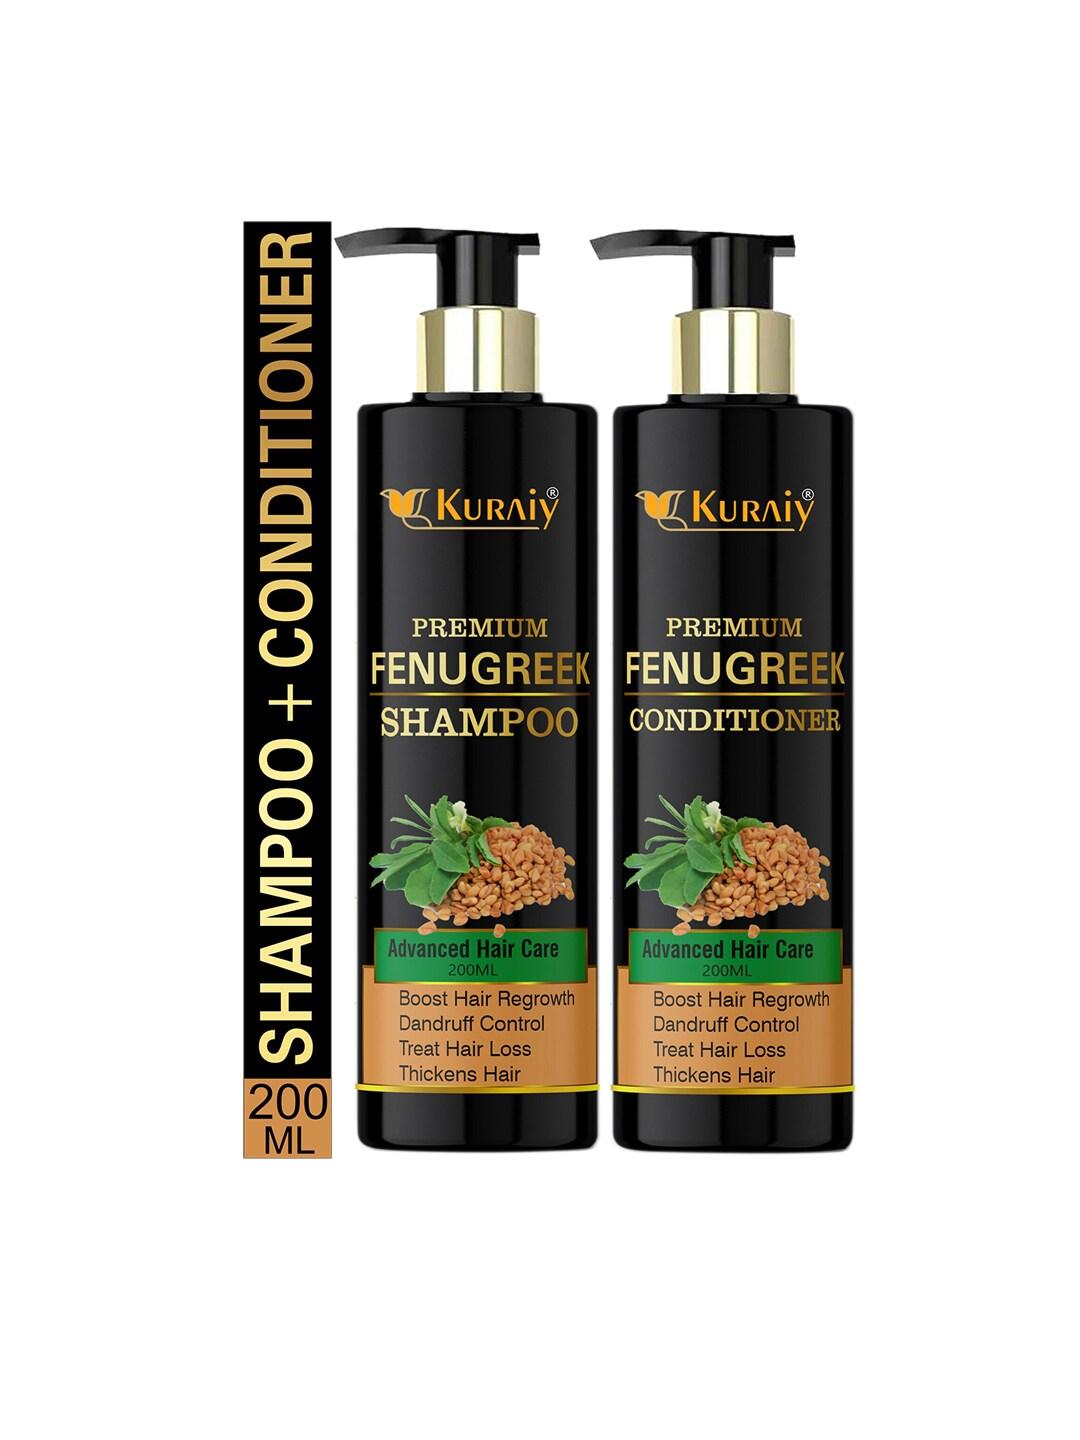 KURAIY Premium Advanced Hair Care Fenugreek Shampoo & Conditioner - 200 ml Each